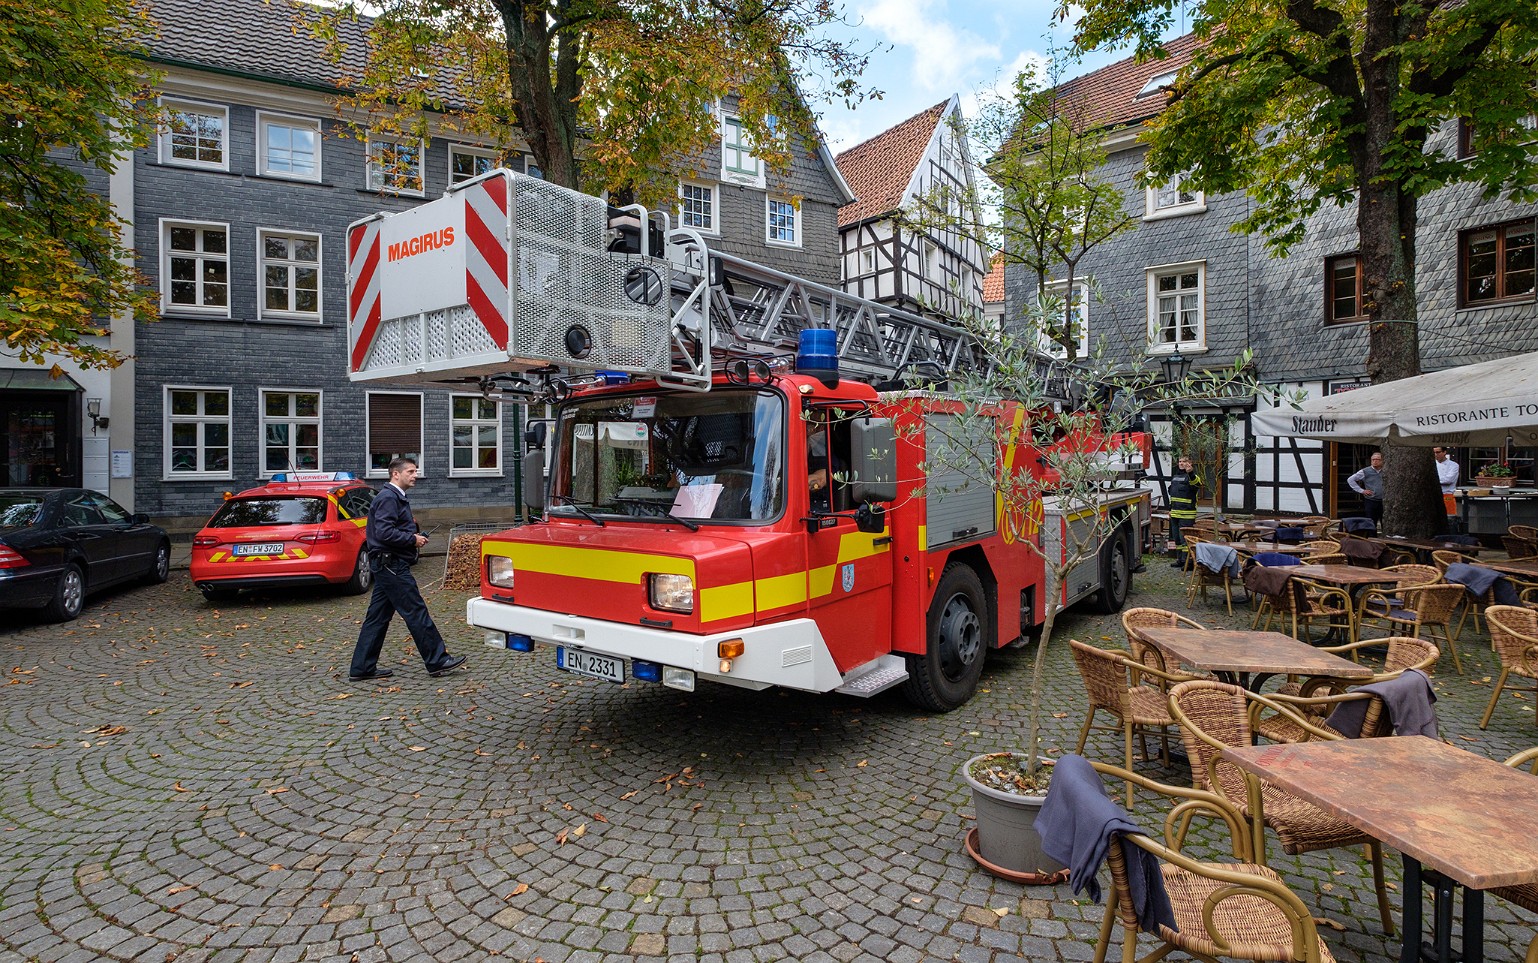 Kirchplatz_029_Feuerwehr-Hattingen_X-T2_11mm_-7,1_1-240_LR69_sRGB